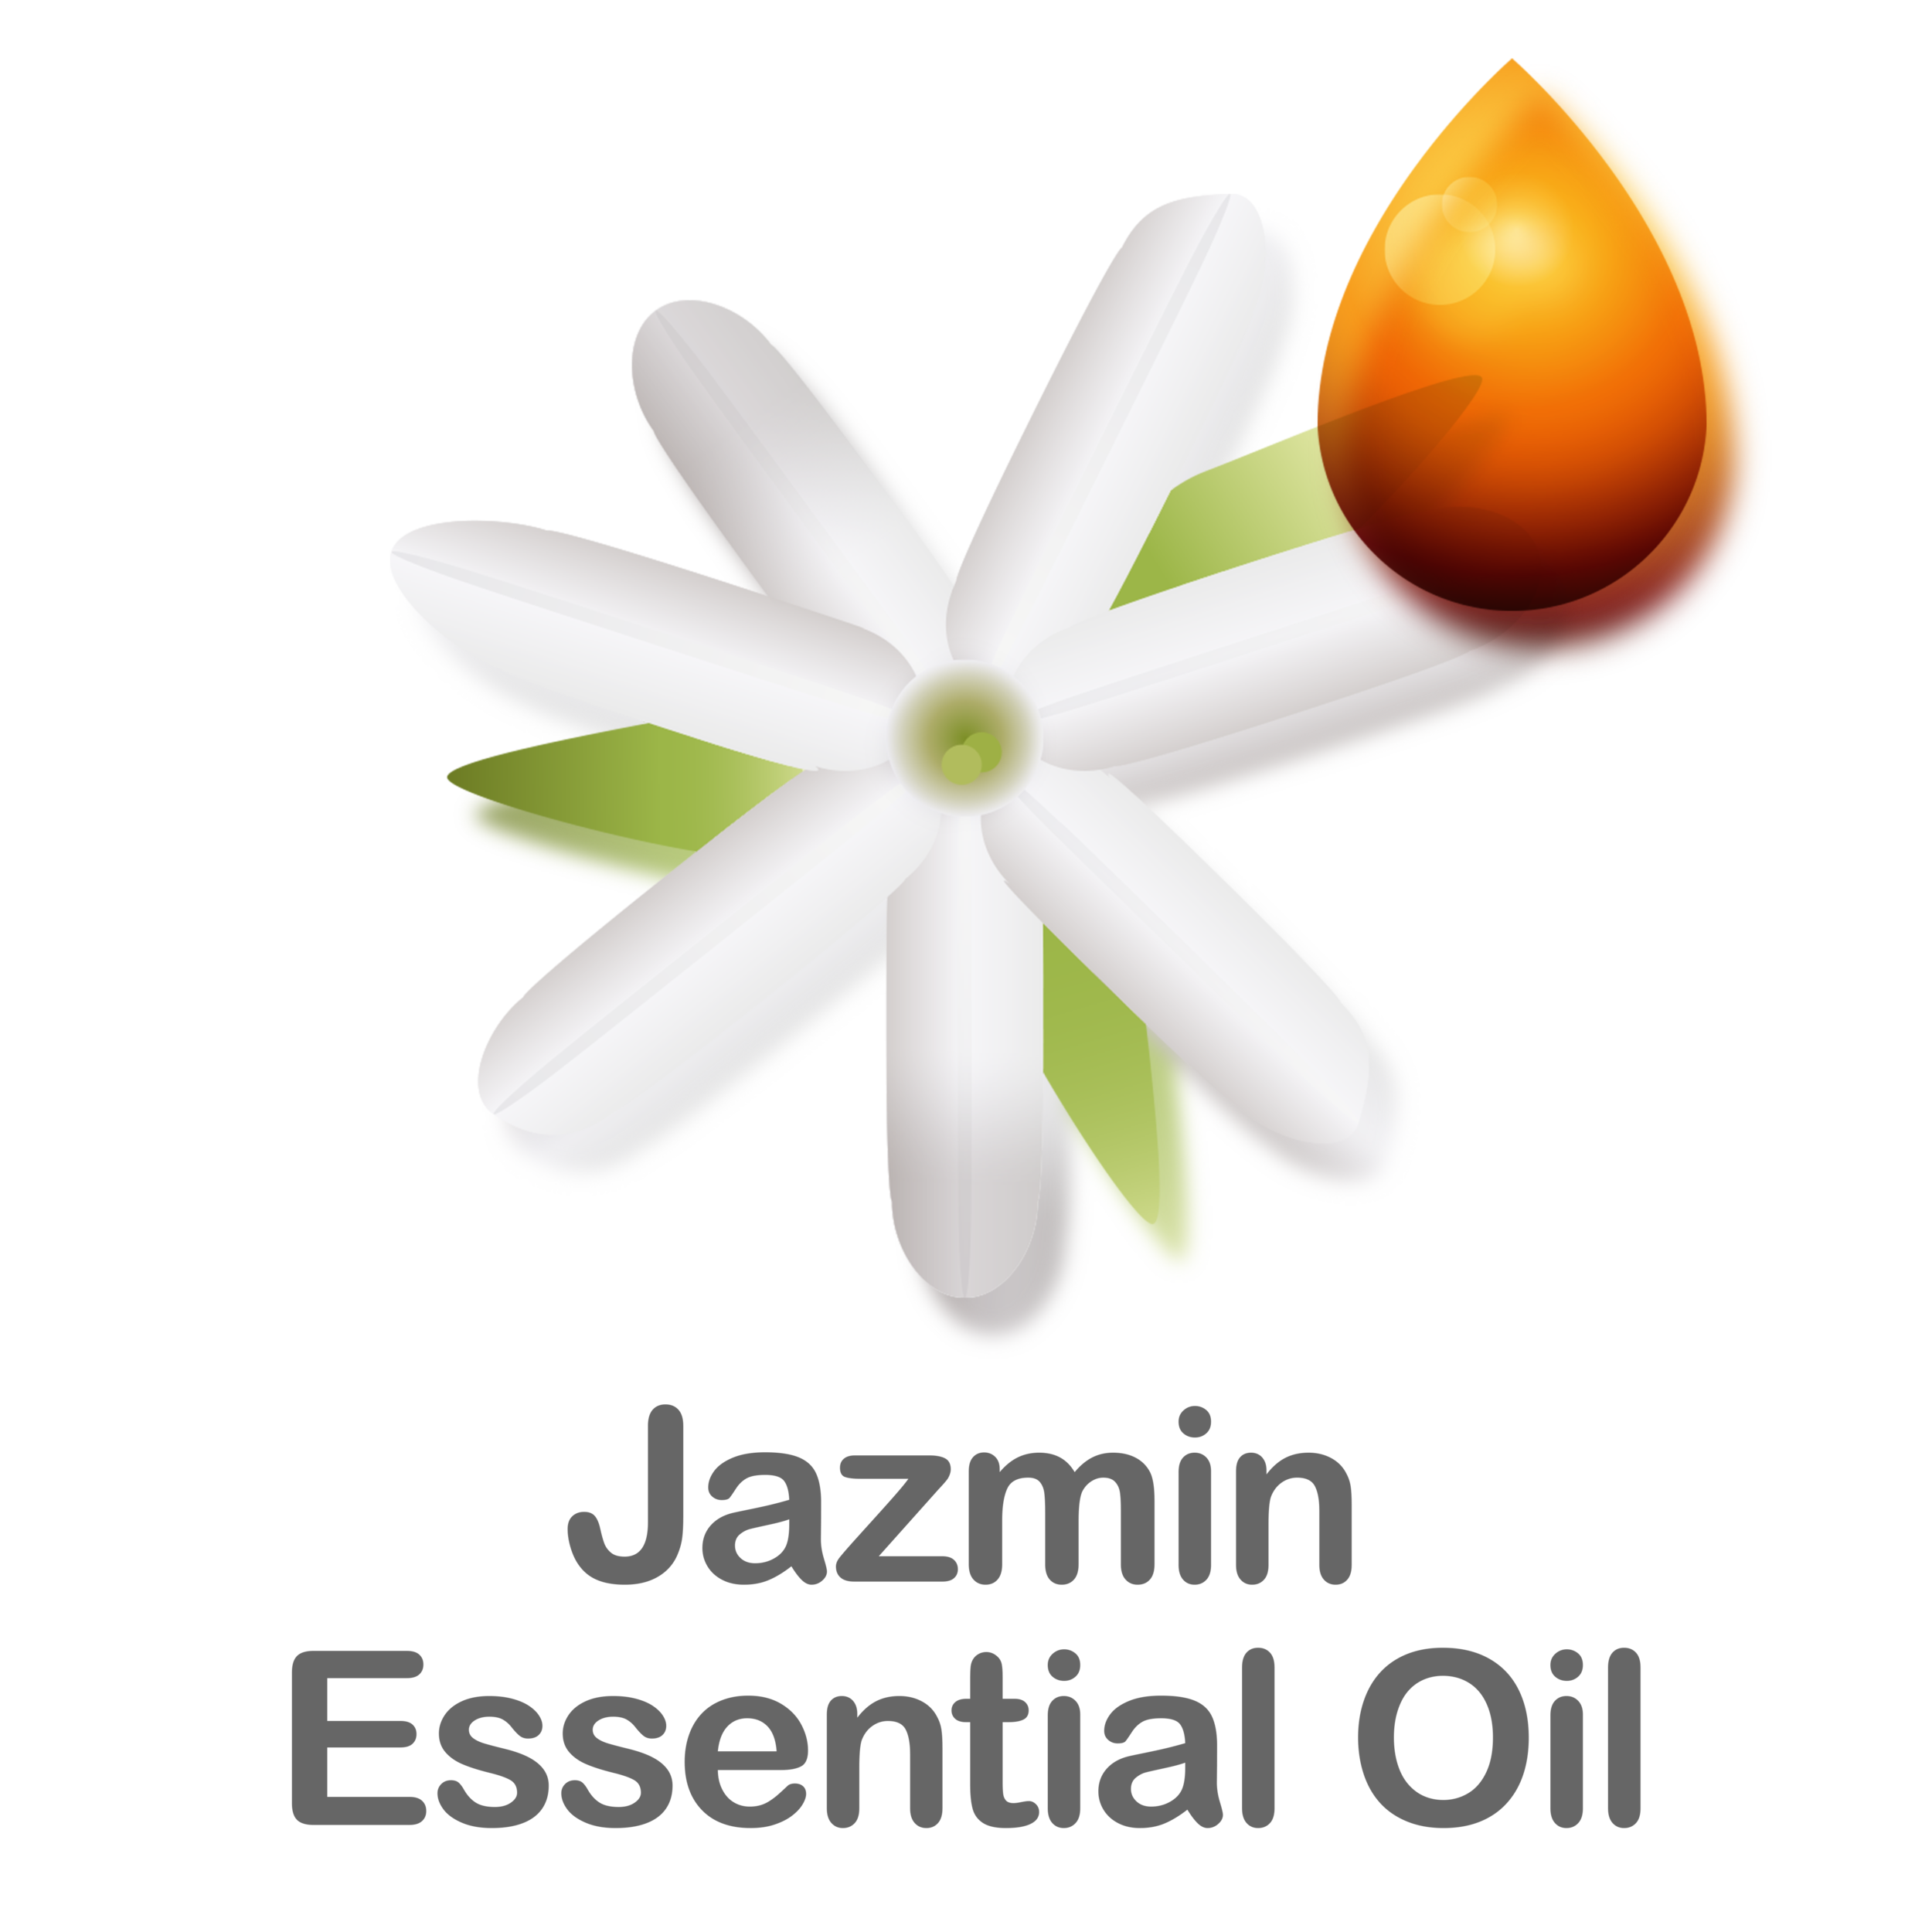 Jazmin Essential Oil